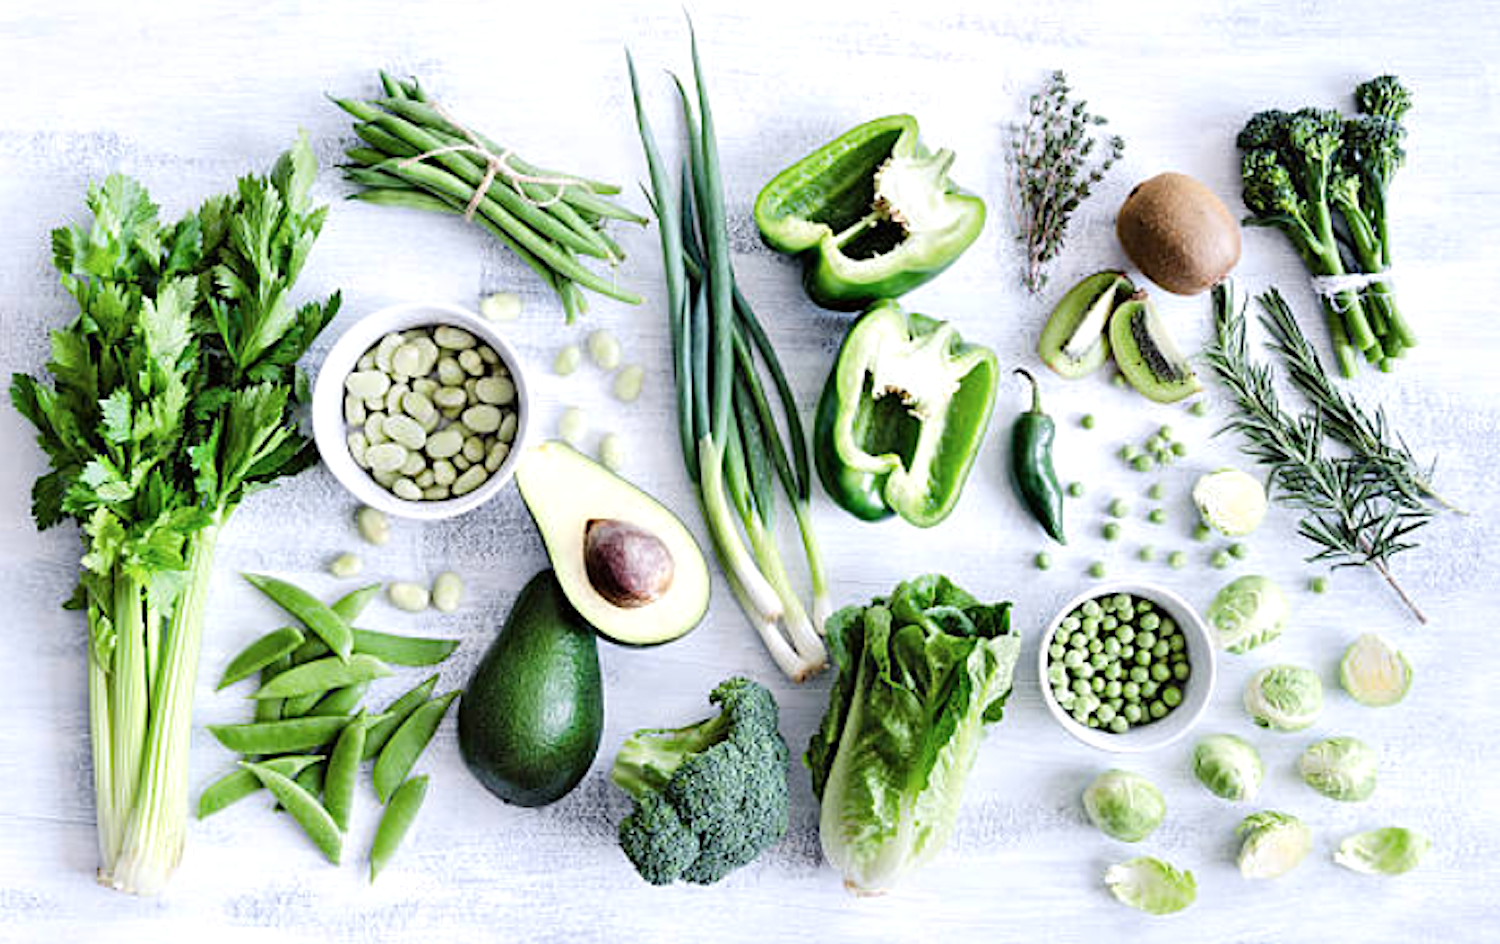 Grünes Gemüse mit viel Antioxidantien